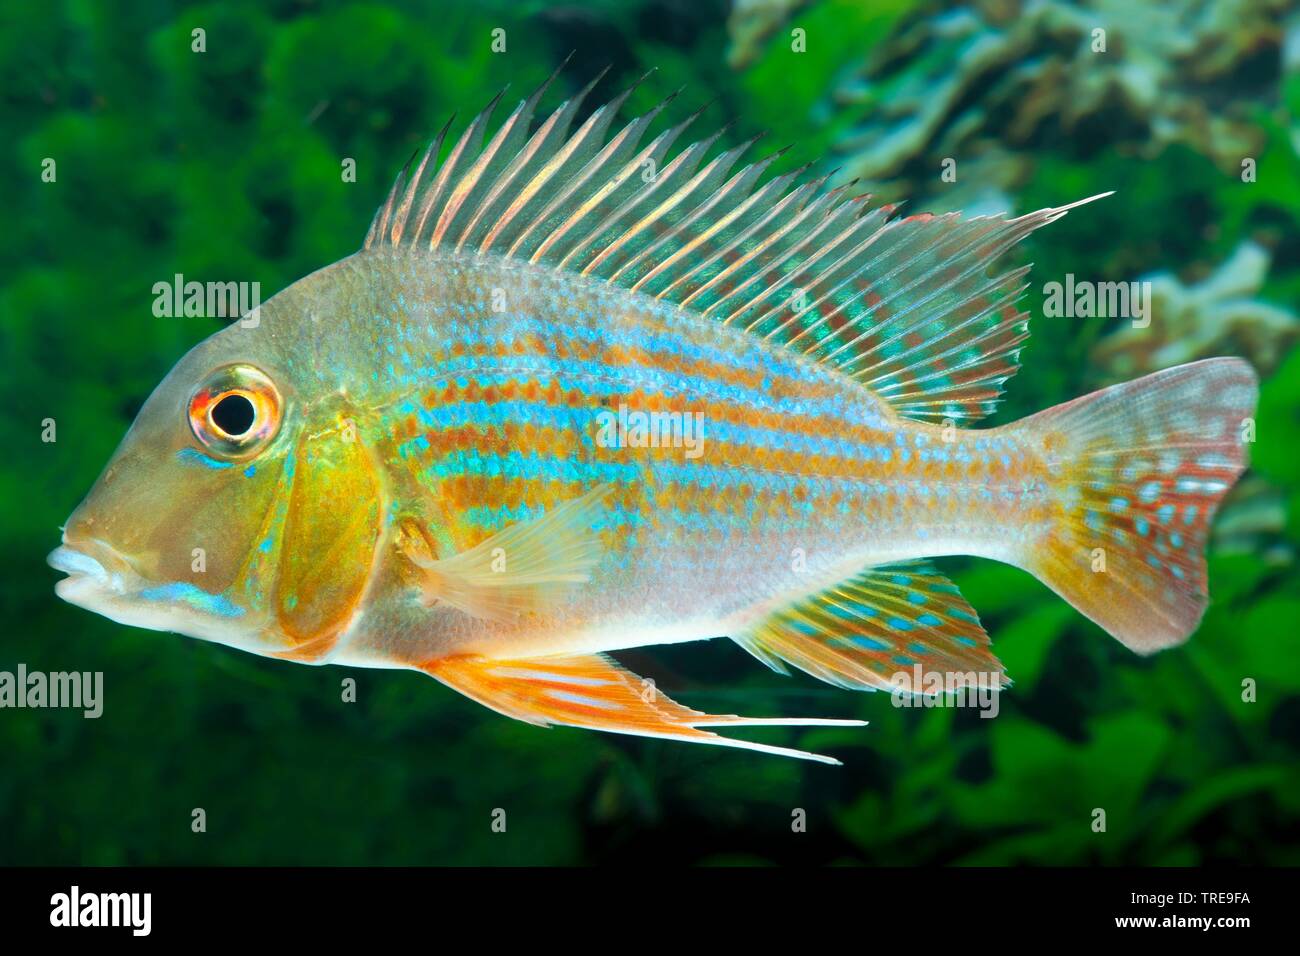 Surinam pearl cichlid, Surinam Geophagus (Geophagus surinamensis), swimming, side view Stock Photo